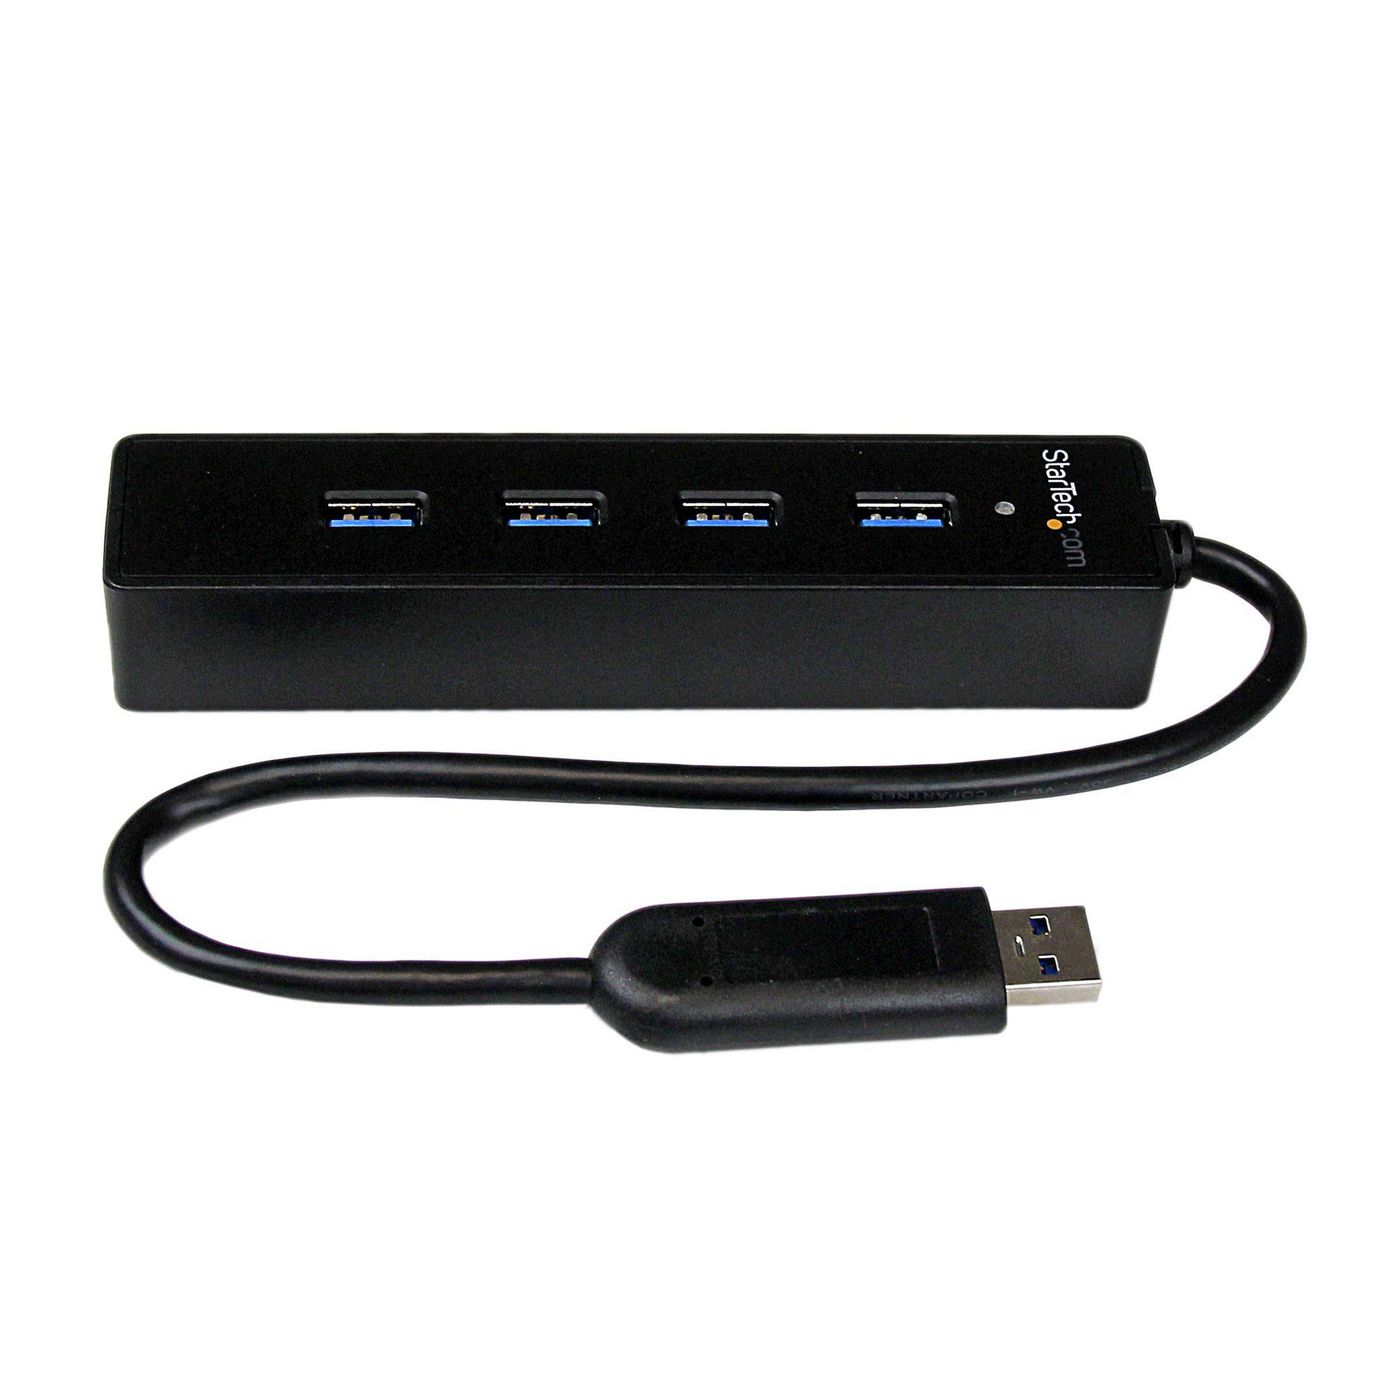 StarTechcom ST4300PBU3 4 PORT PORTABLE USB 3.0 HUB 